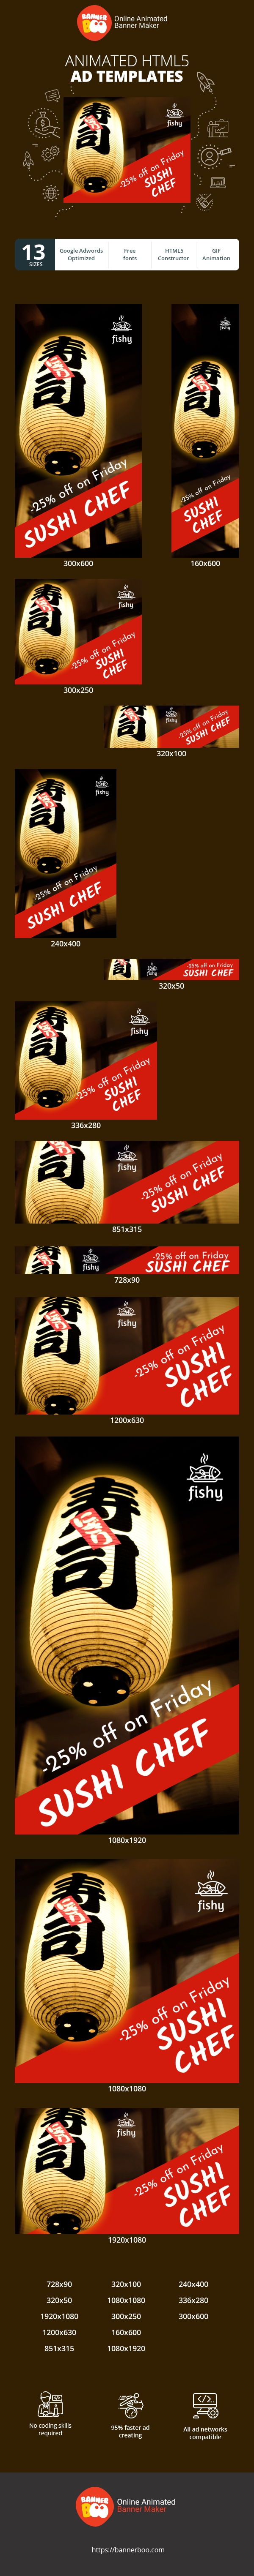 Szablon reklamy banerowej — Sushi Chef — -25% Off On Friday